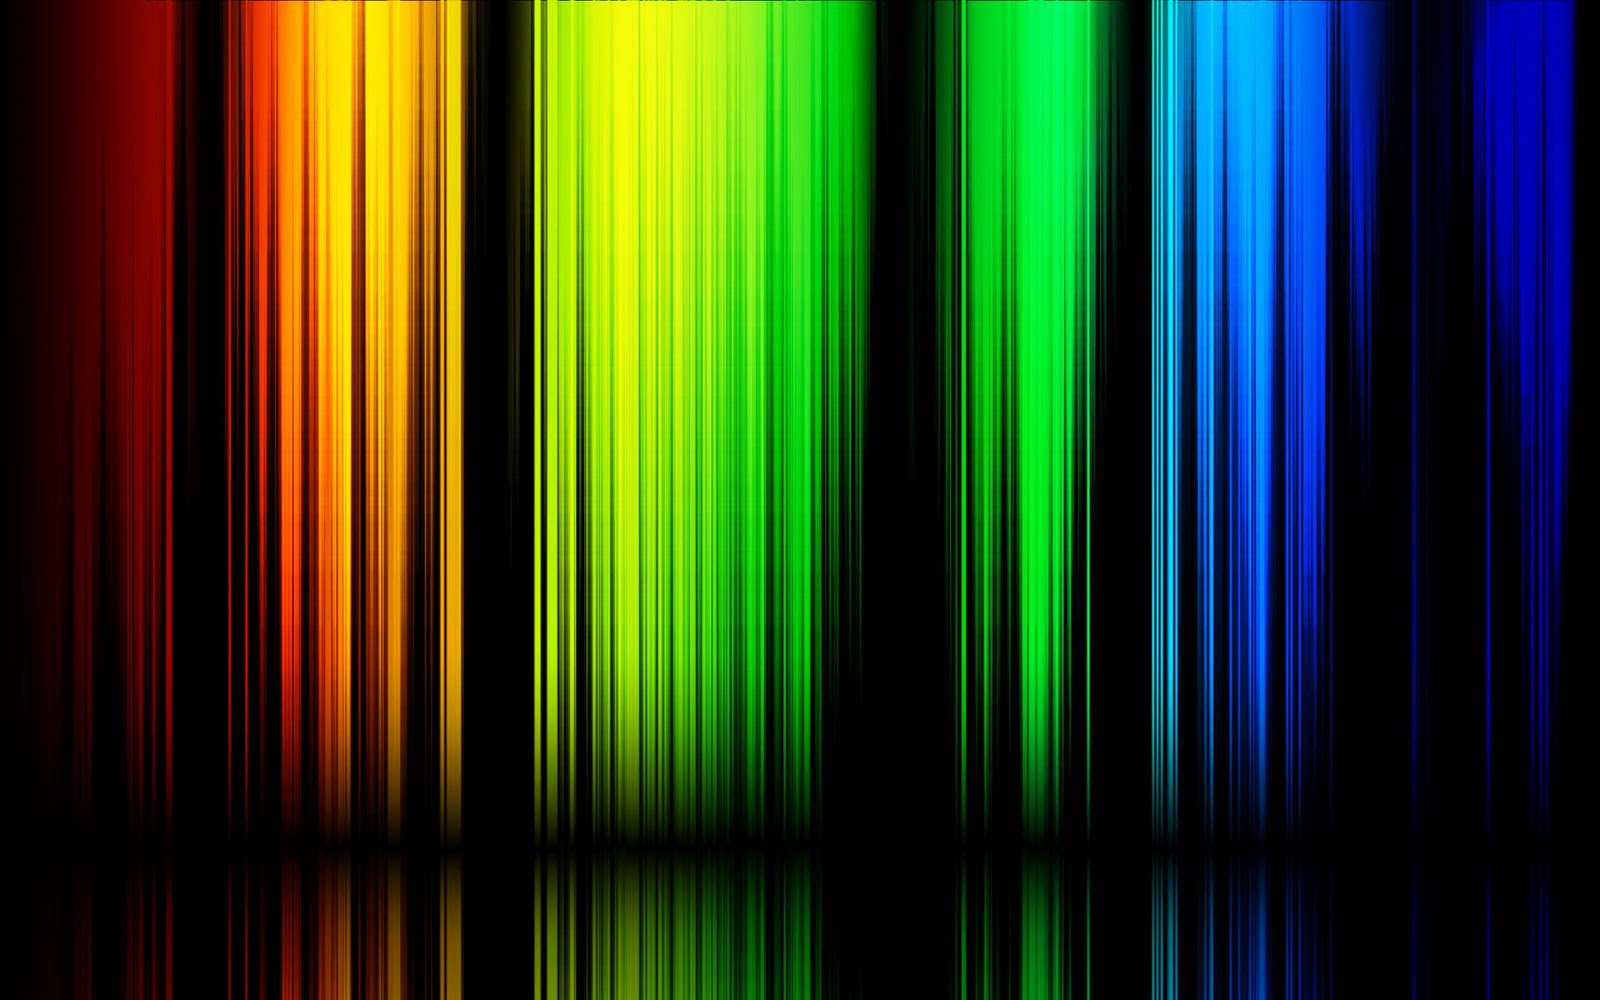  wallpapers lightening wallpapers rainbow colors rainbow wallpapers